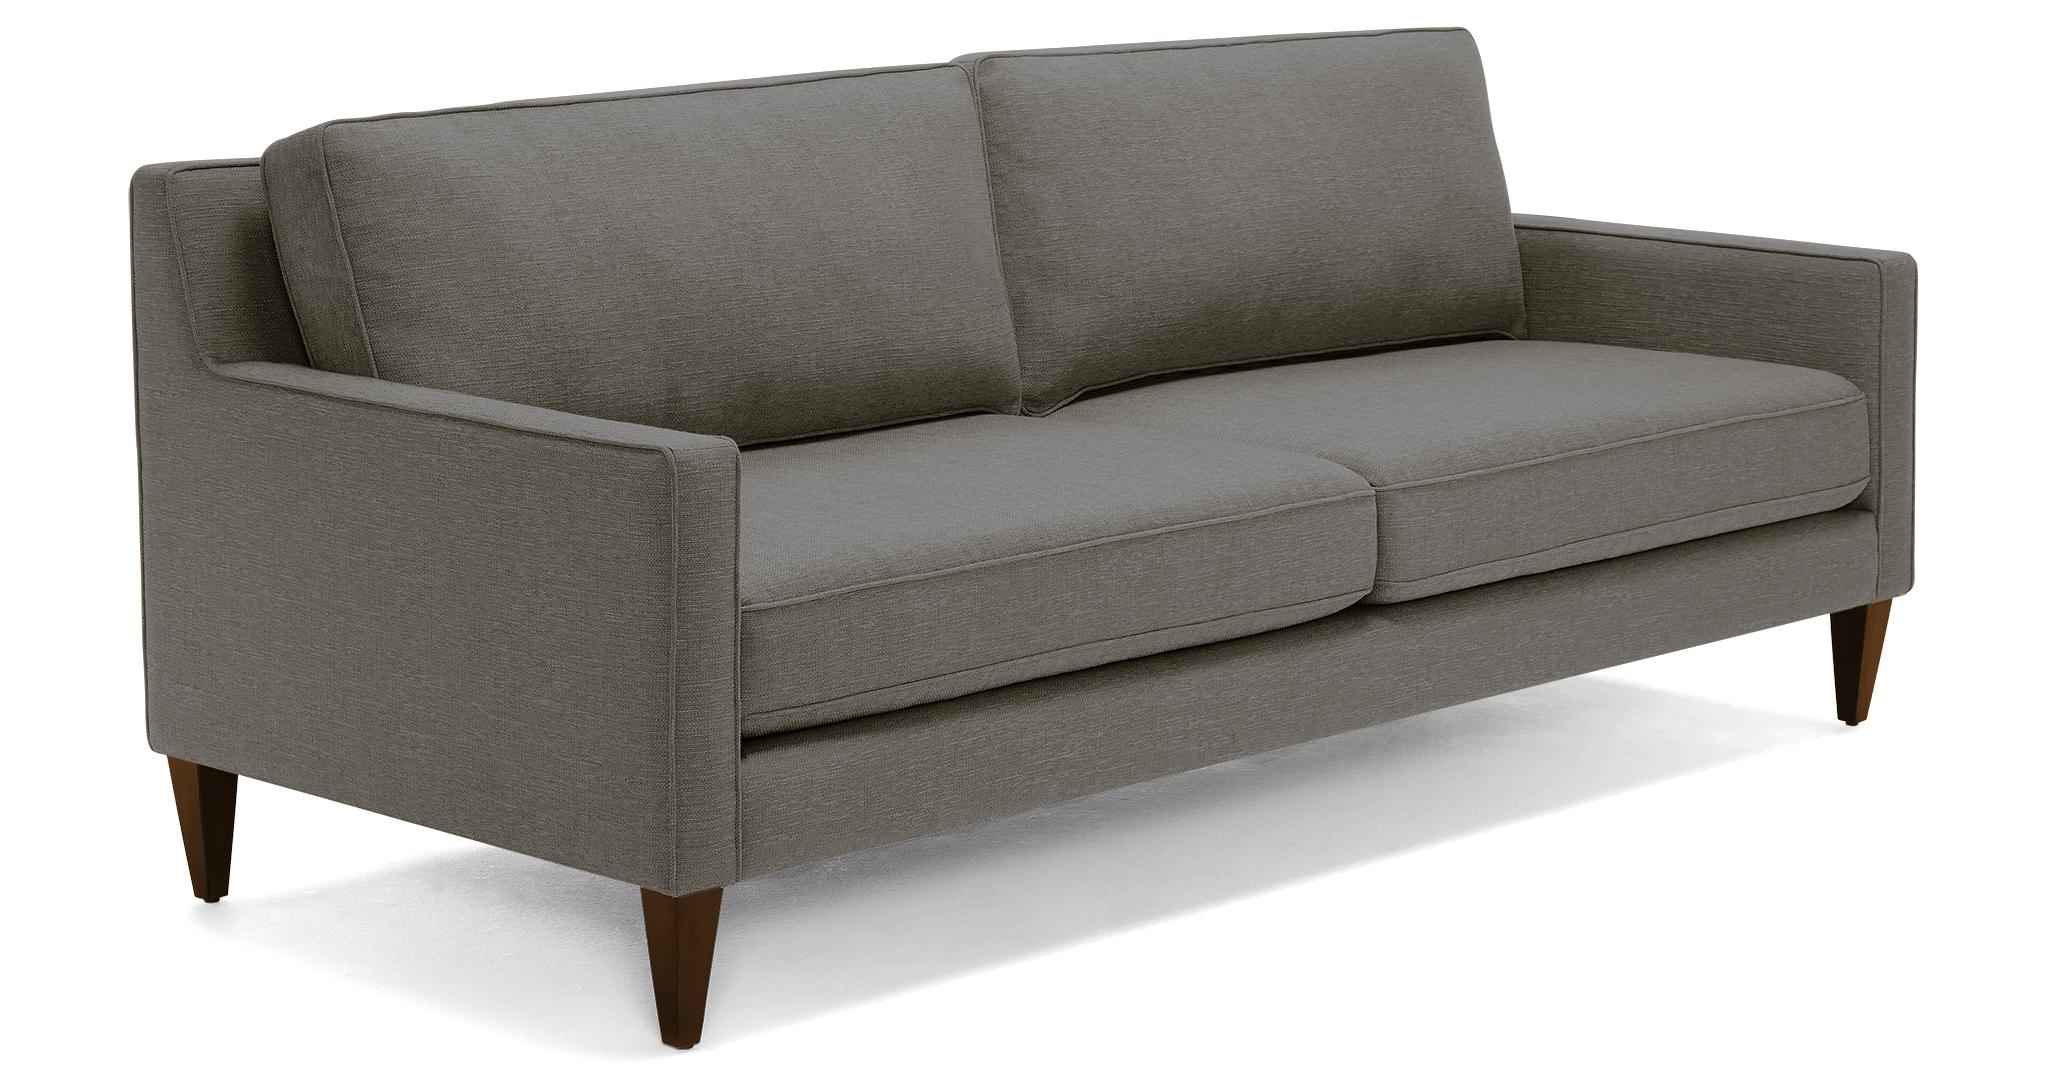 Gray Levi Mid Century Modern Sofa - Essence Ash - Mocha - Image 1